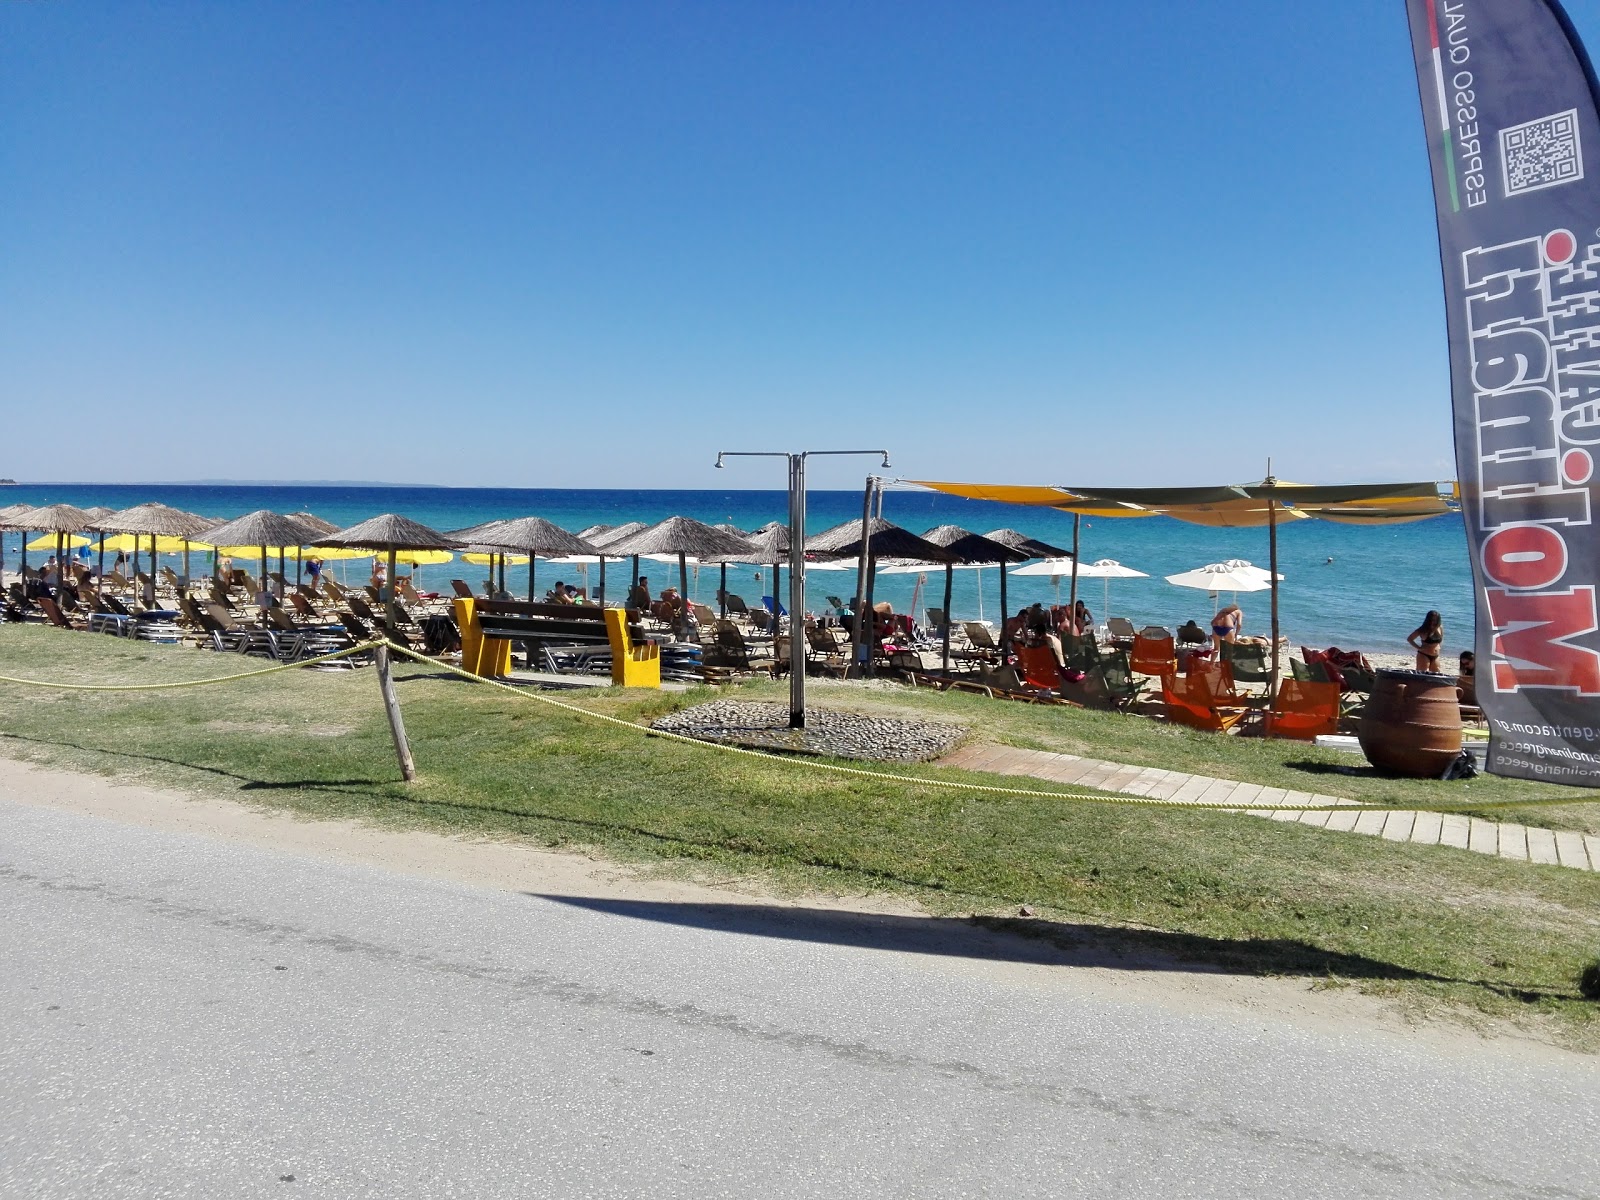 Foto de Geoponika beach - lugar popular entre os apreciadores de relaxamento